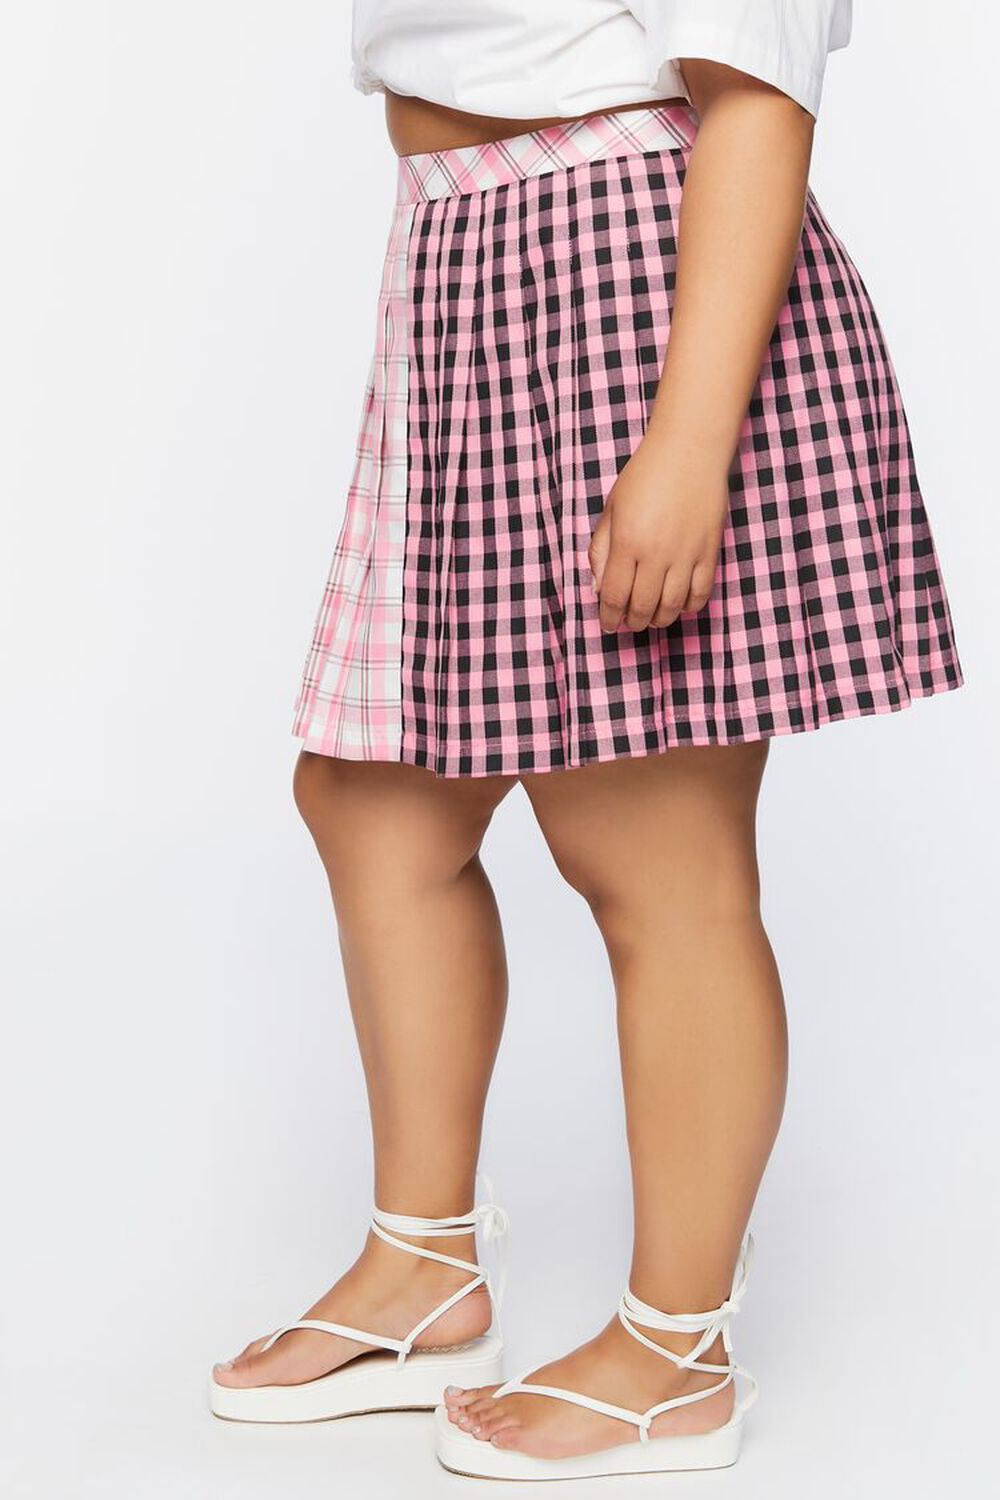 PINK/MULTI Plus Size Reworked Plaid Mini Skirt, image 3